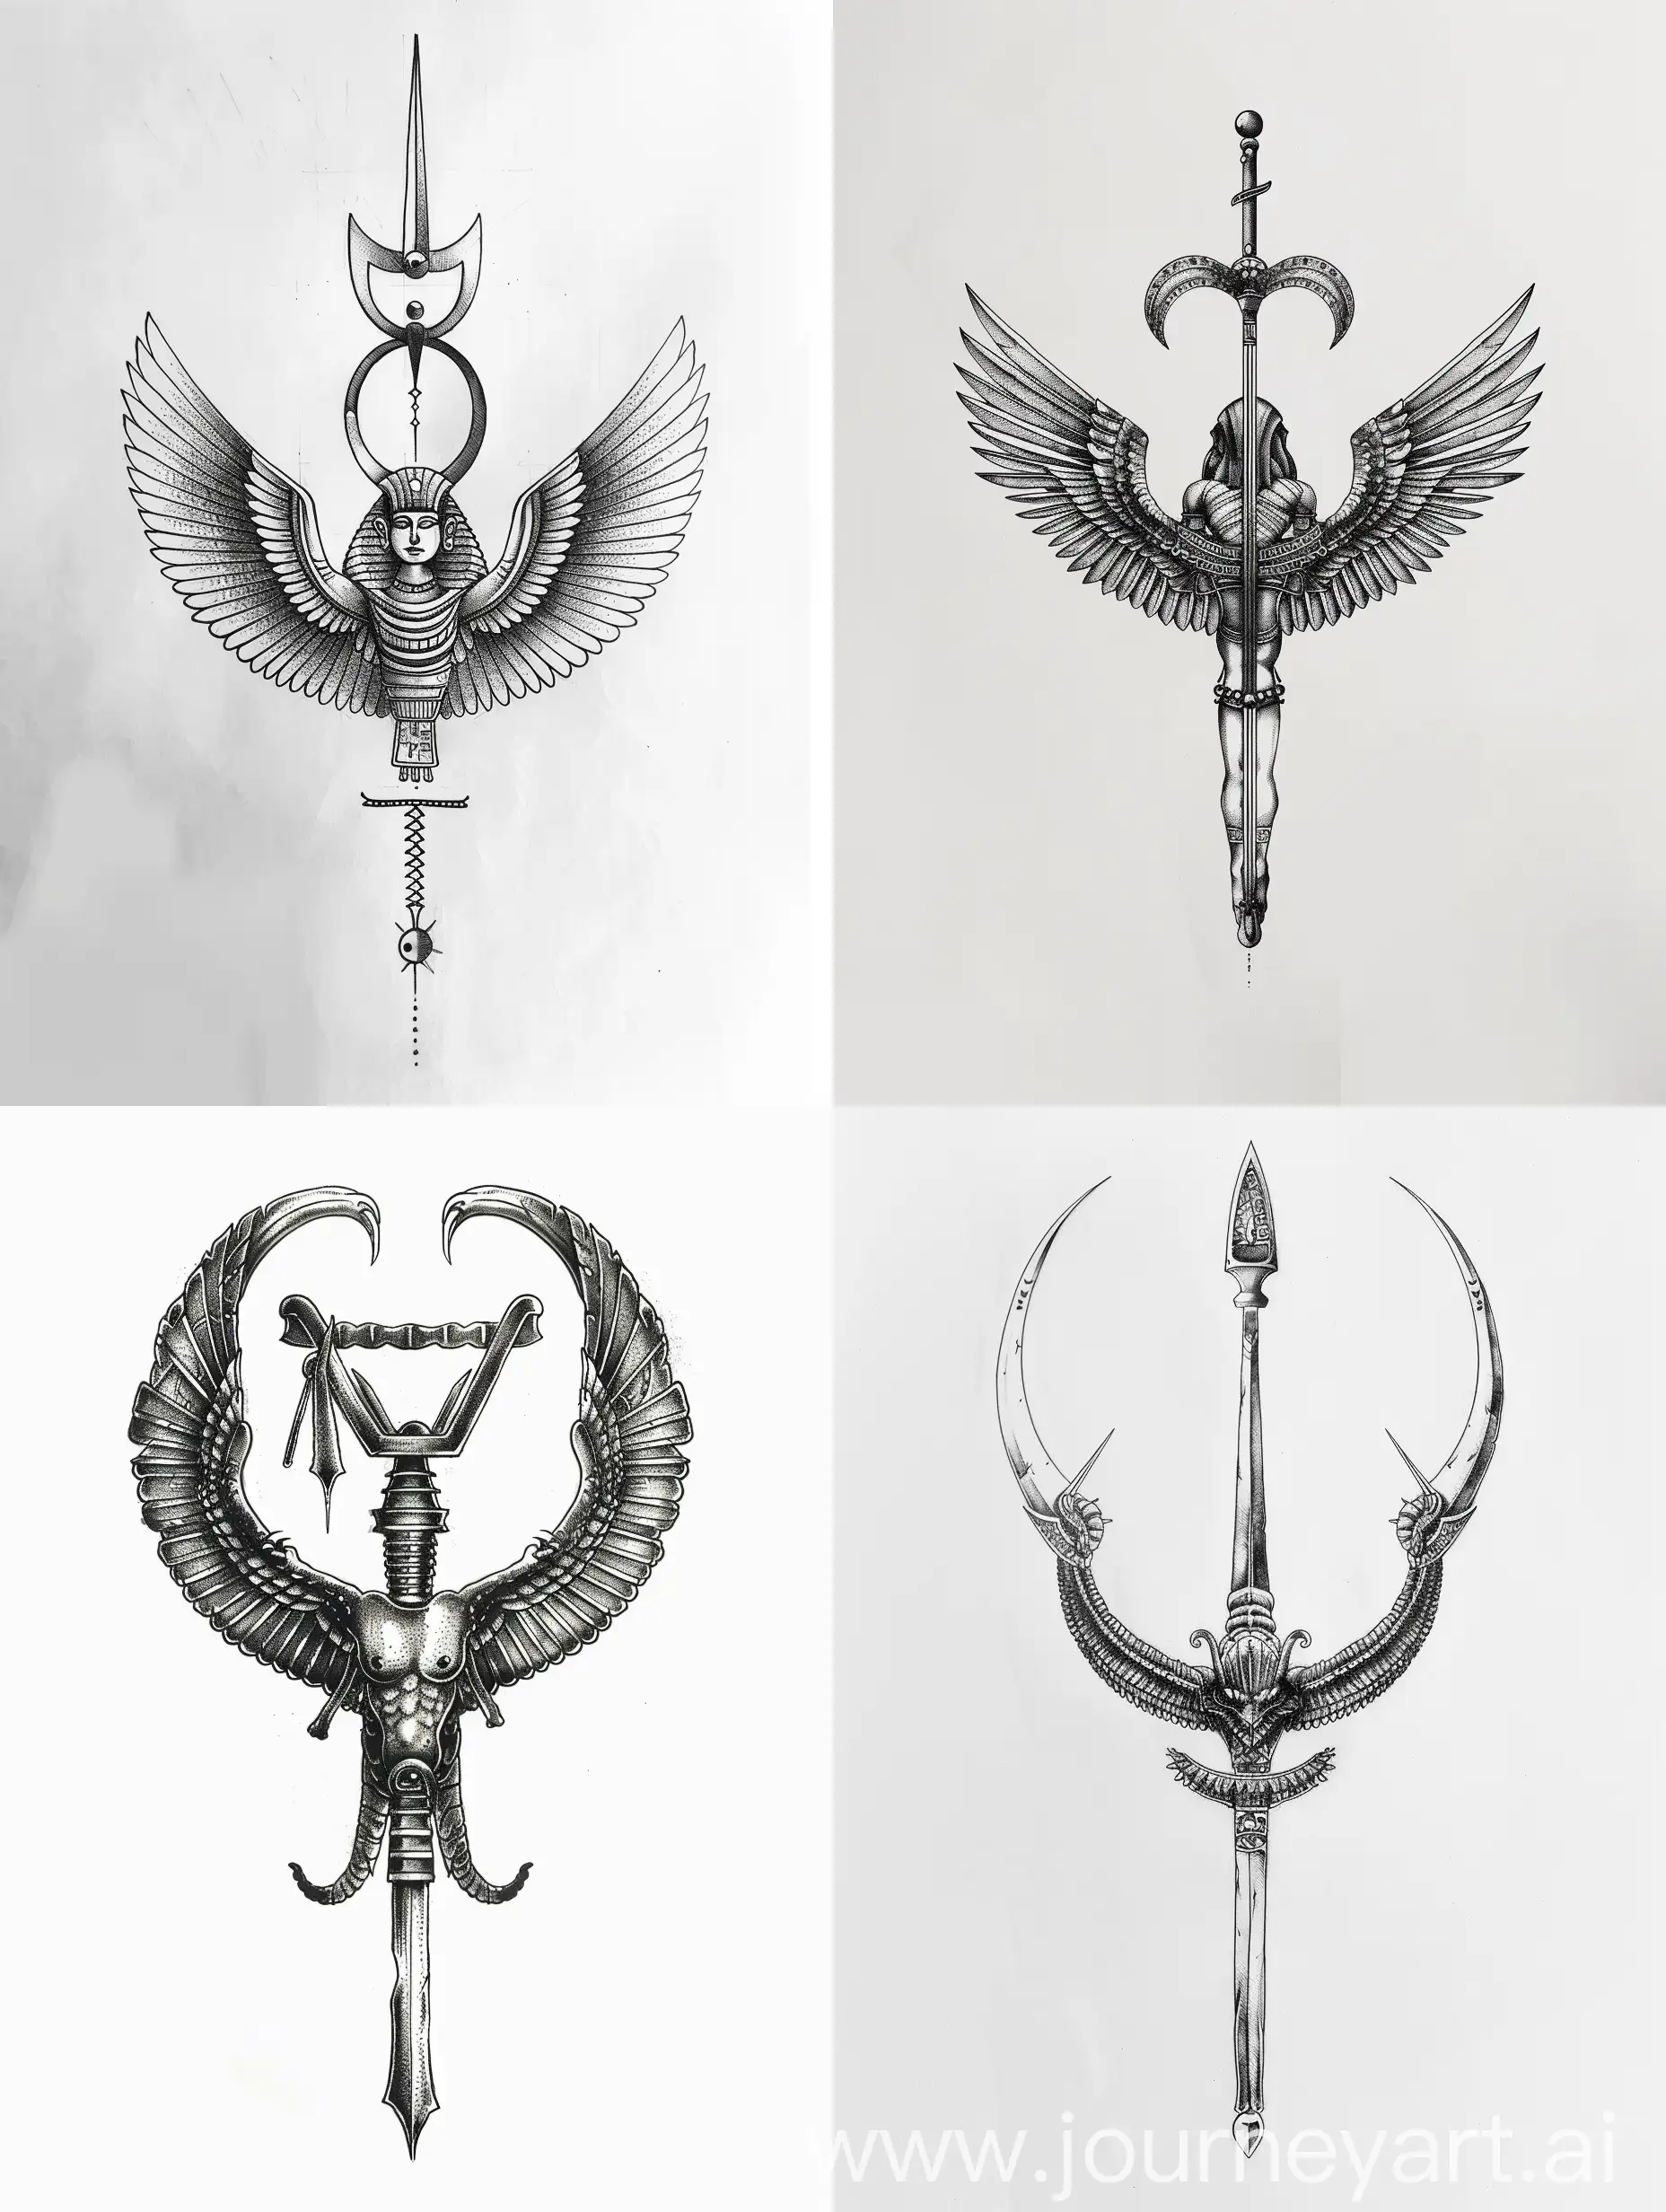 minimalist egyptian mythology, Osiris tattoo design sketch, white background, symmetry

